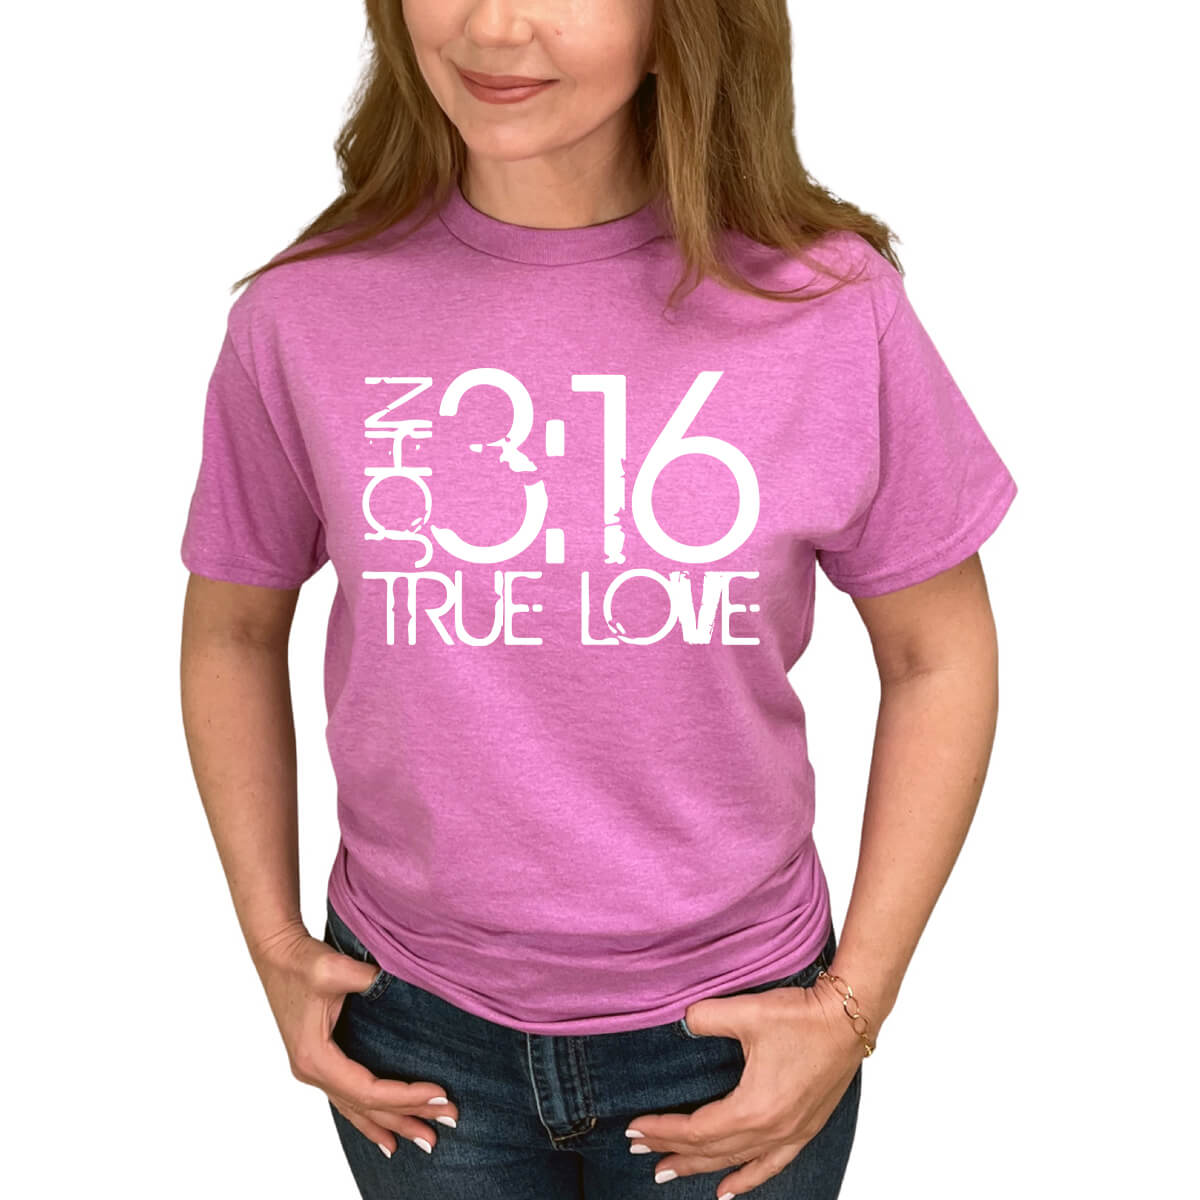 John 3:16 True Love T-Shirt